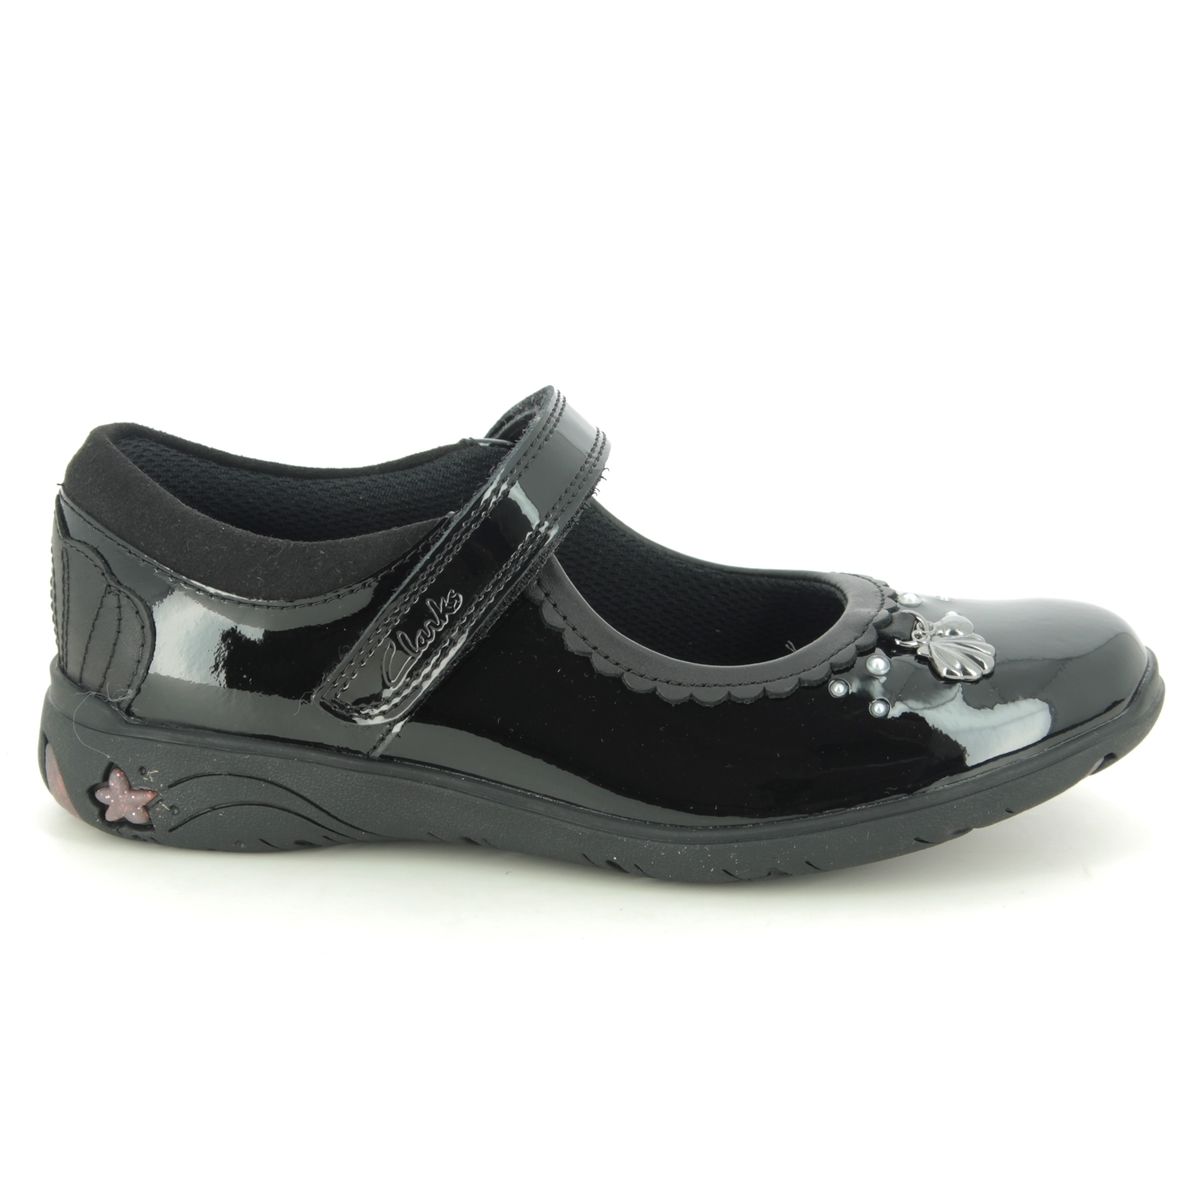 Clarks Sea Shimmer K G Fit Black patent school shoes